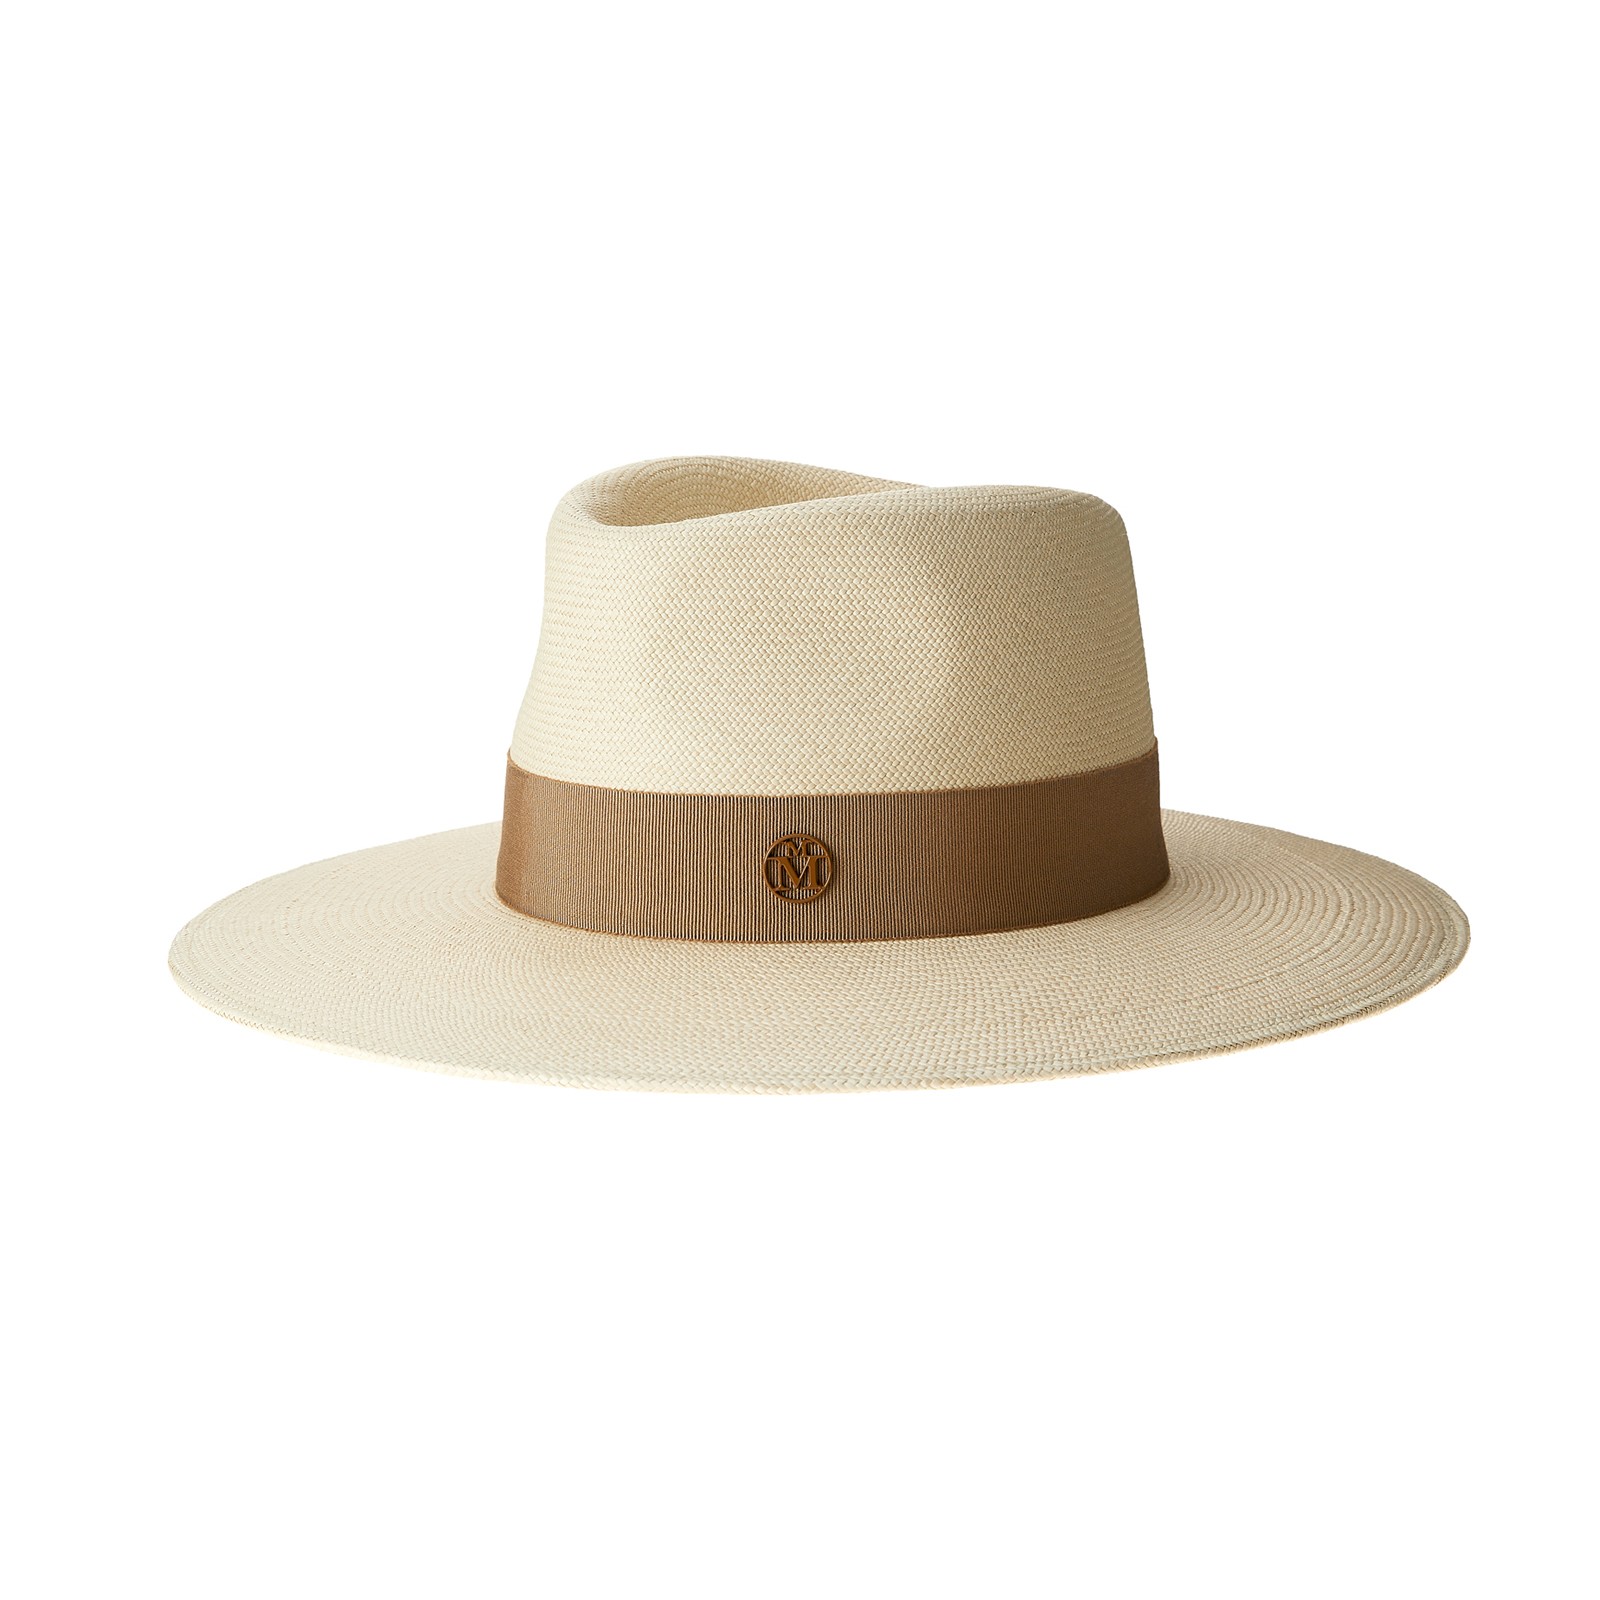 Panama straw fedora hat with beige grosgrain ribbon